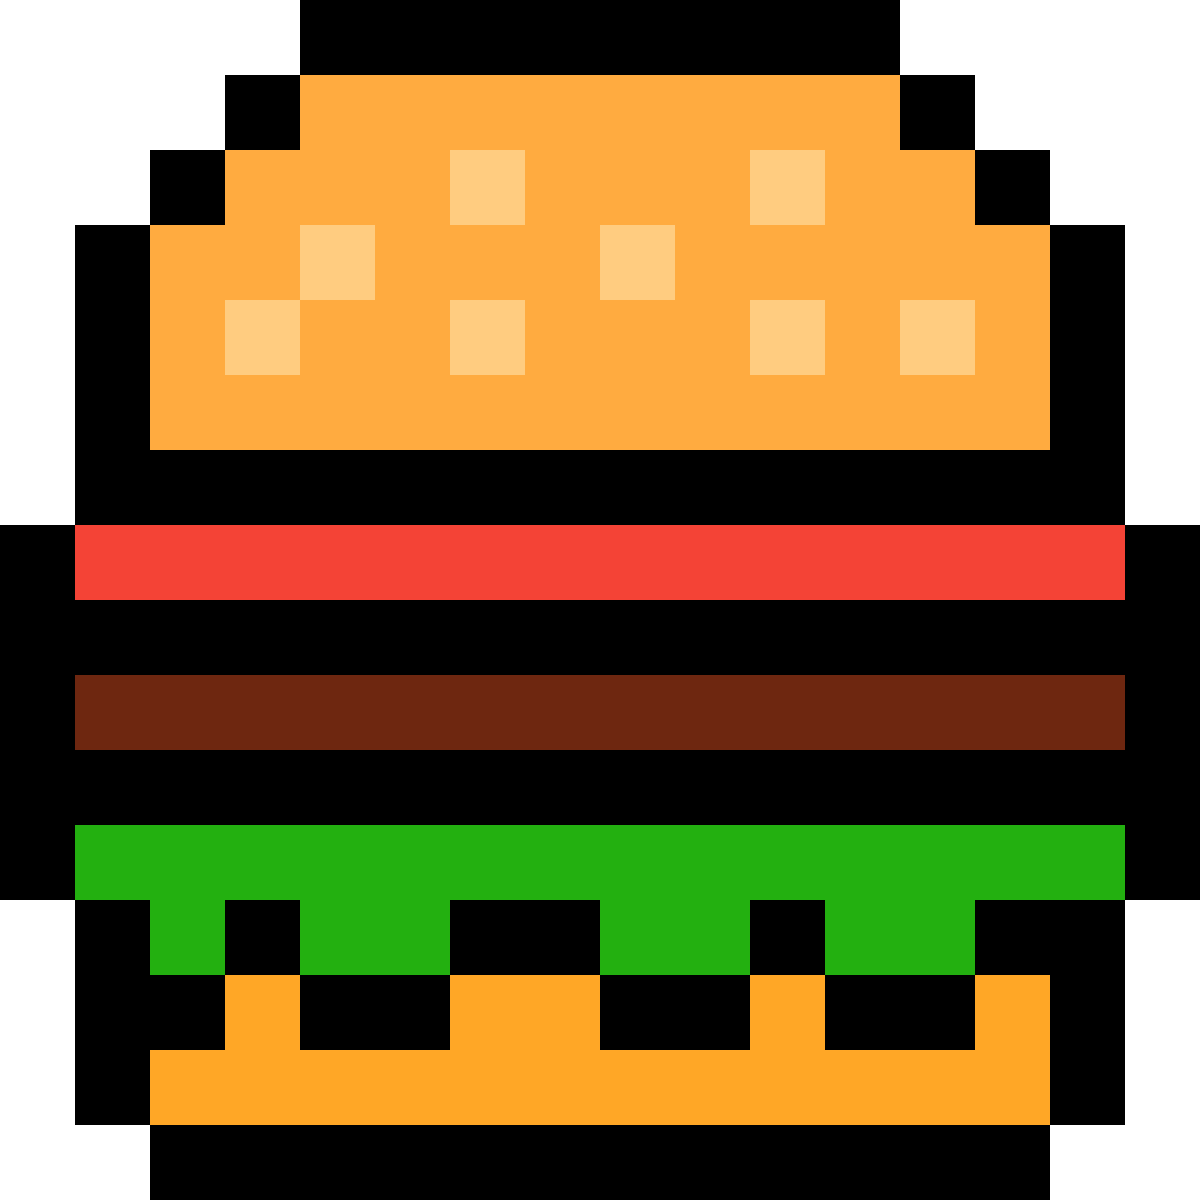 Фаст фуд майнкрафт. Пиксель арт. Еда из пикселей. Бутерброд пиксель арт. Рисунки по клеточкам бургер.